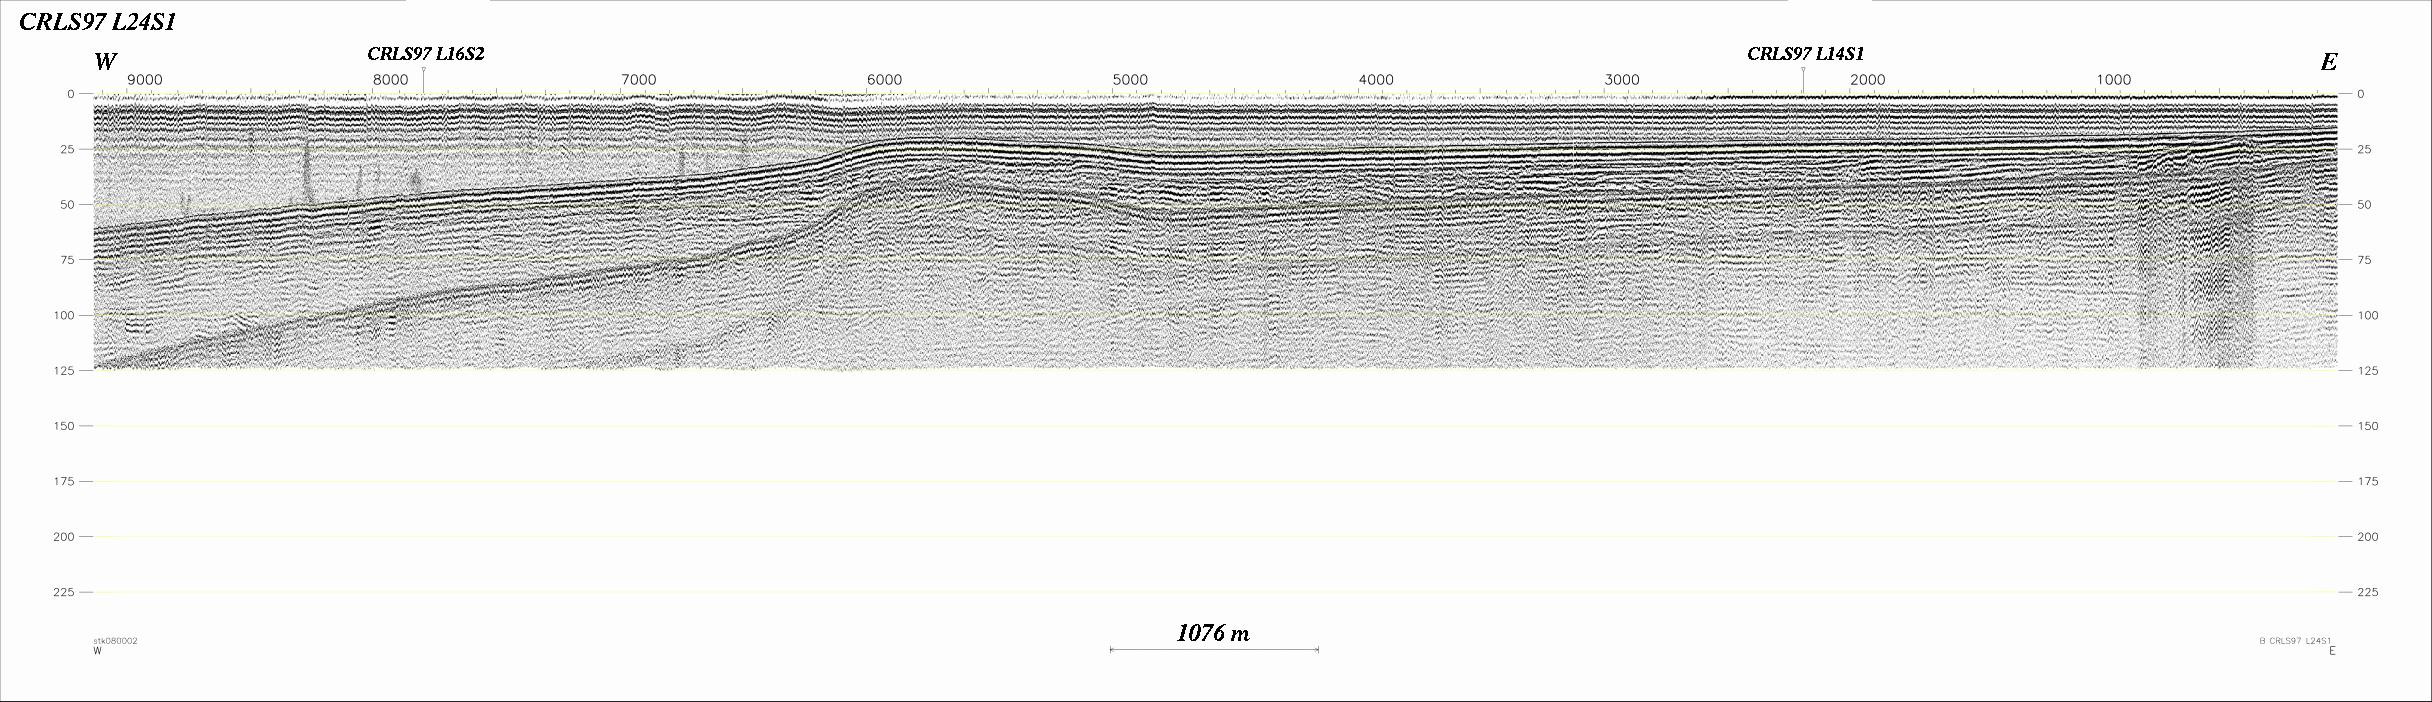 Seismic Reflection Profile Line No.: L24s1 (326221 bytes)